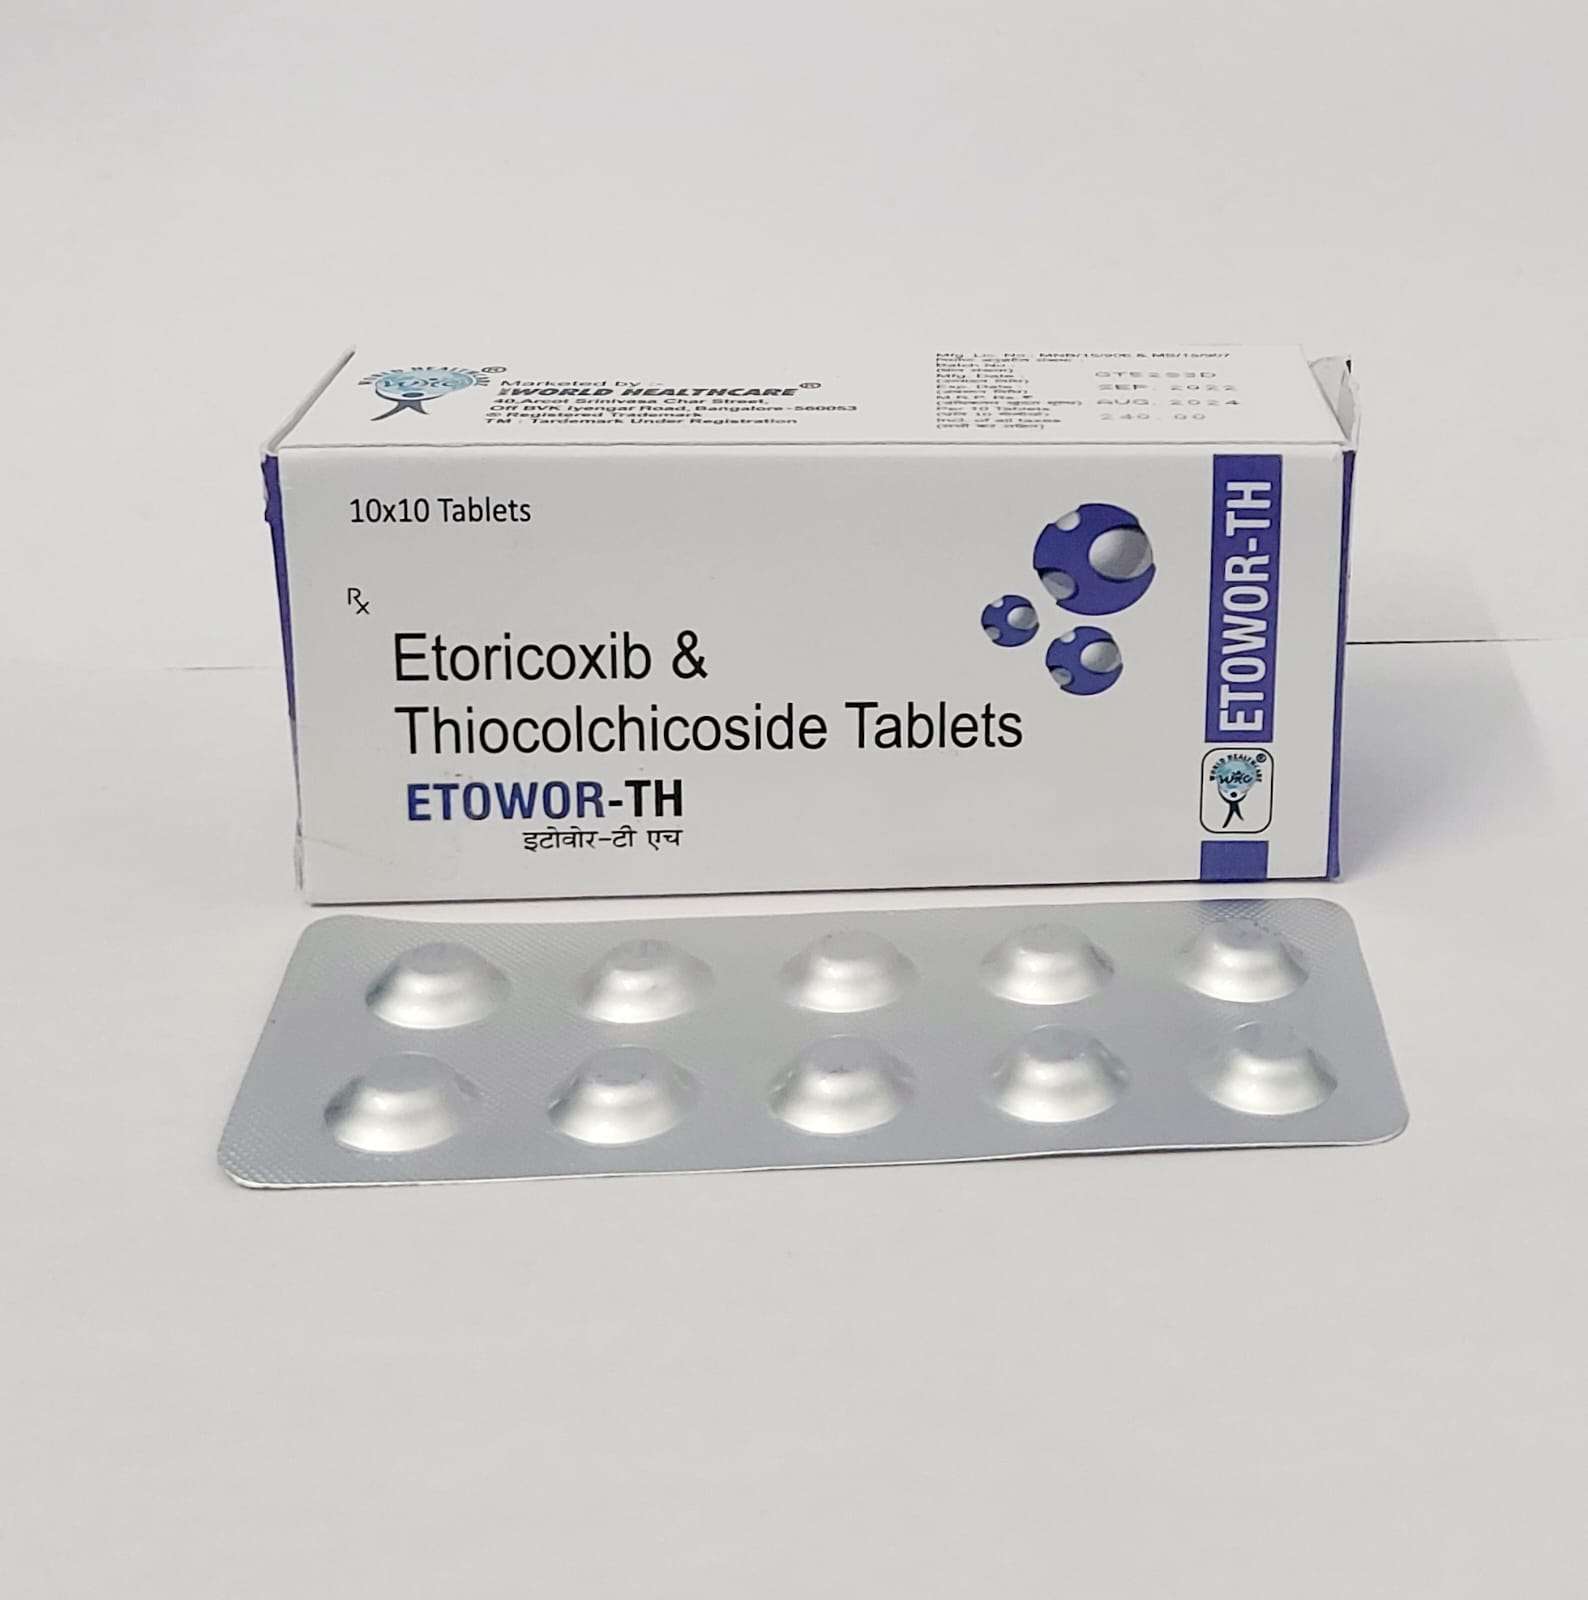 etoricoxib 60mg + thicolchicoside 4mg